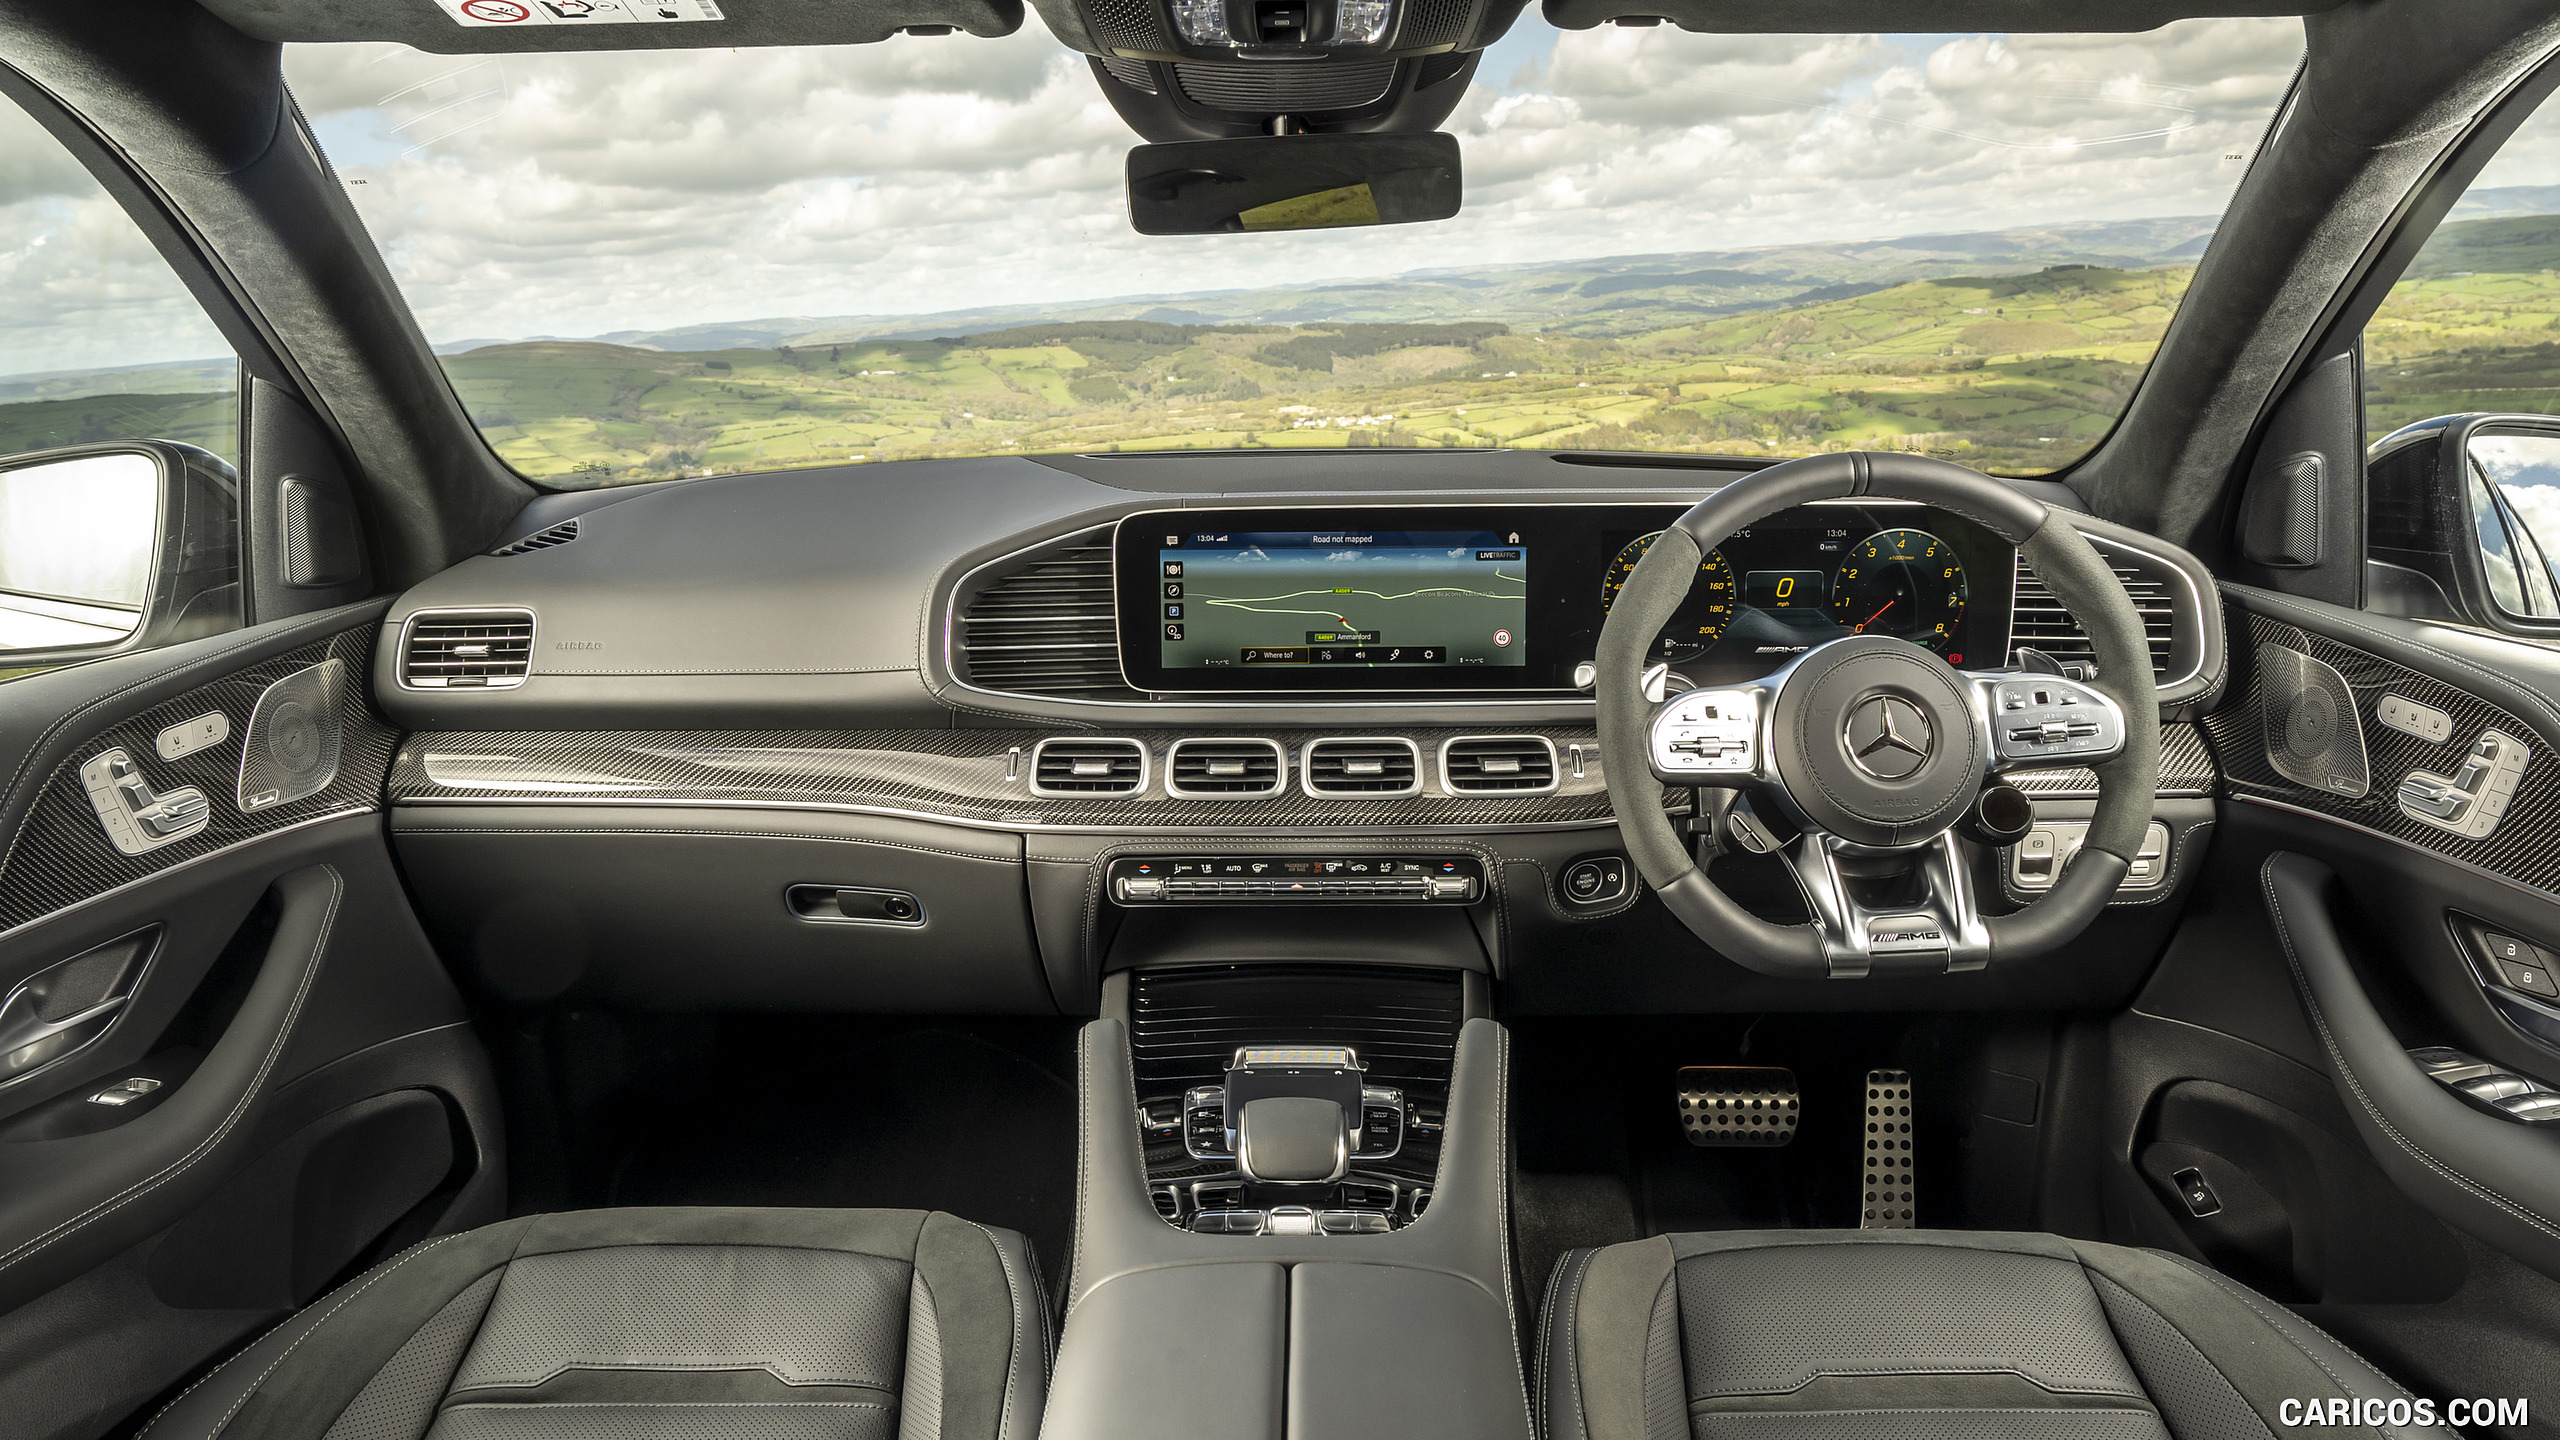 2021 Mercedes-AMG GLE 63 S 4MATIC (UK-Spec) - Interior, Cockpit, #162 of 187